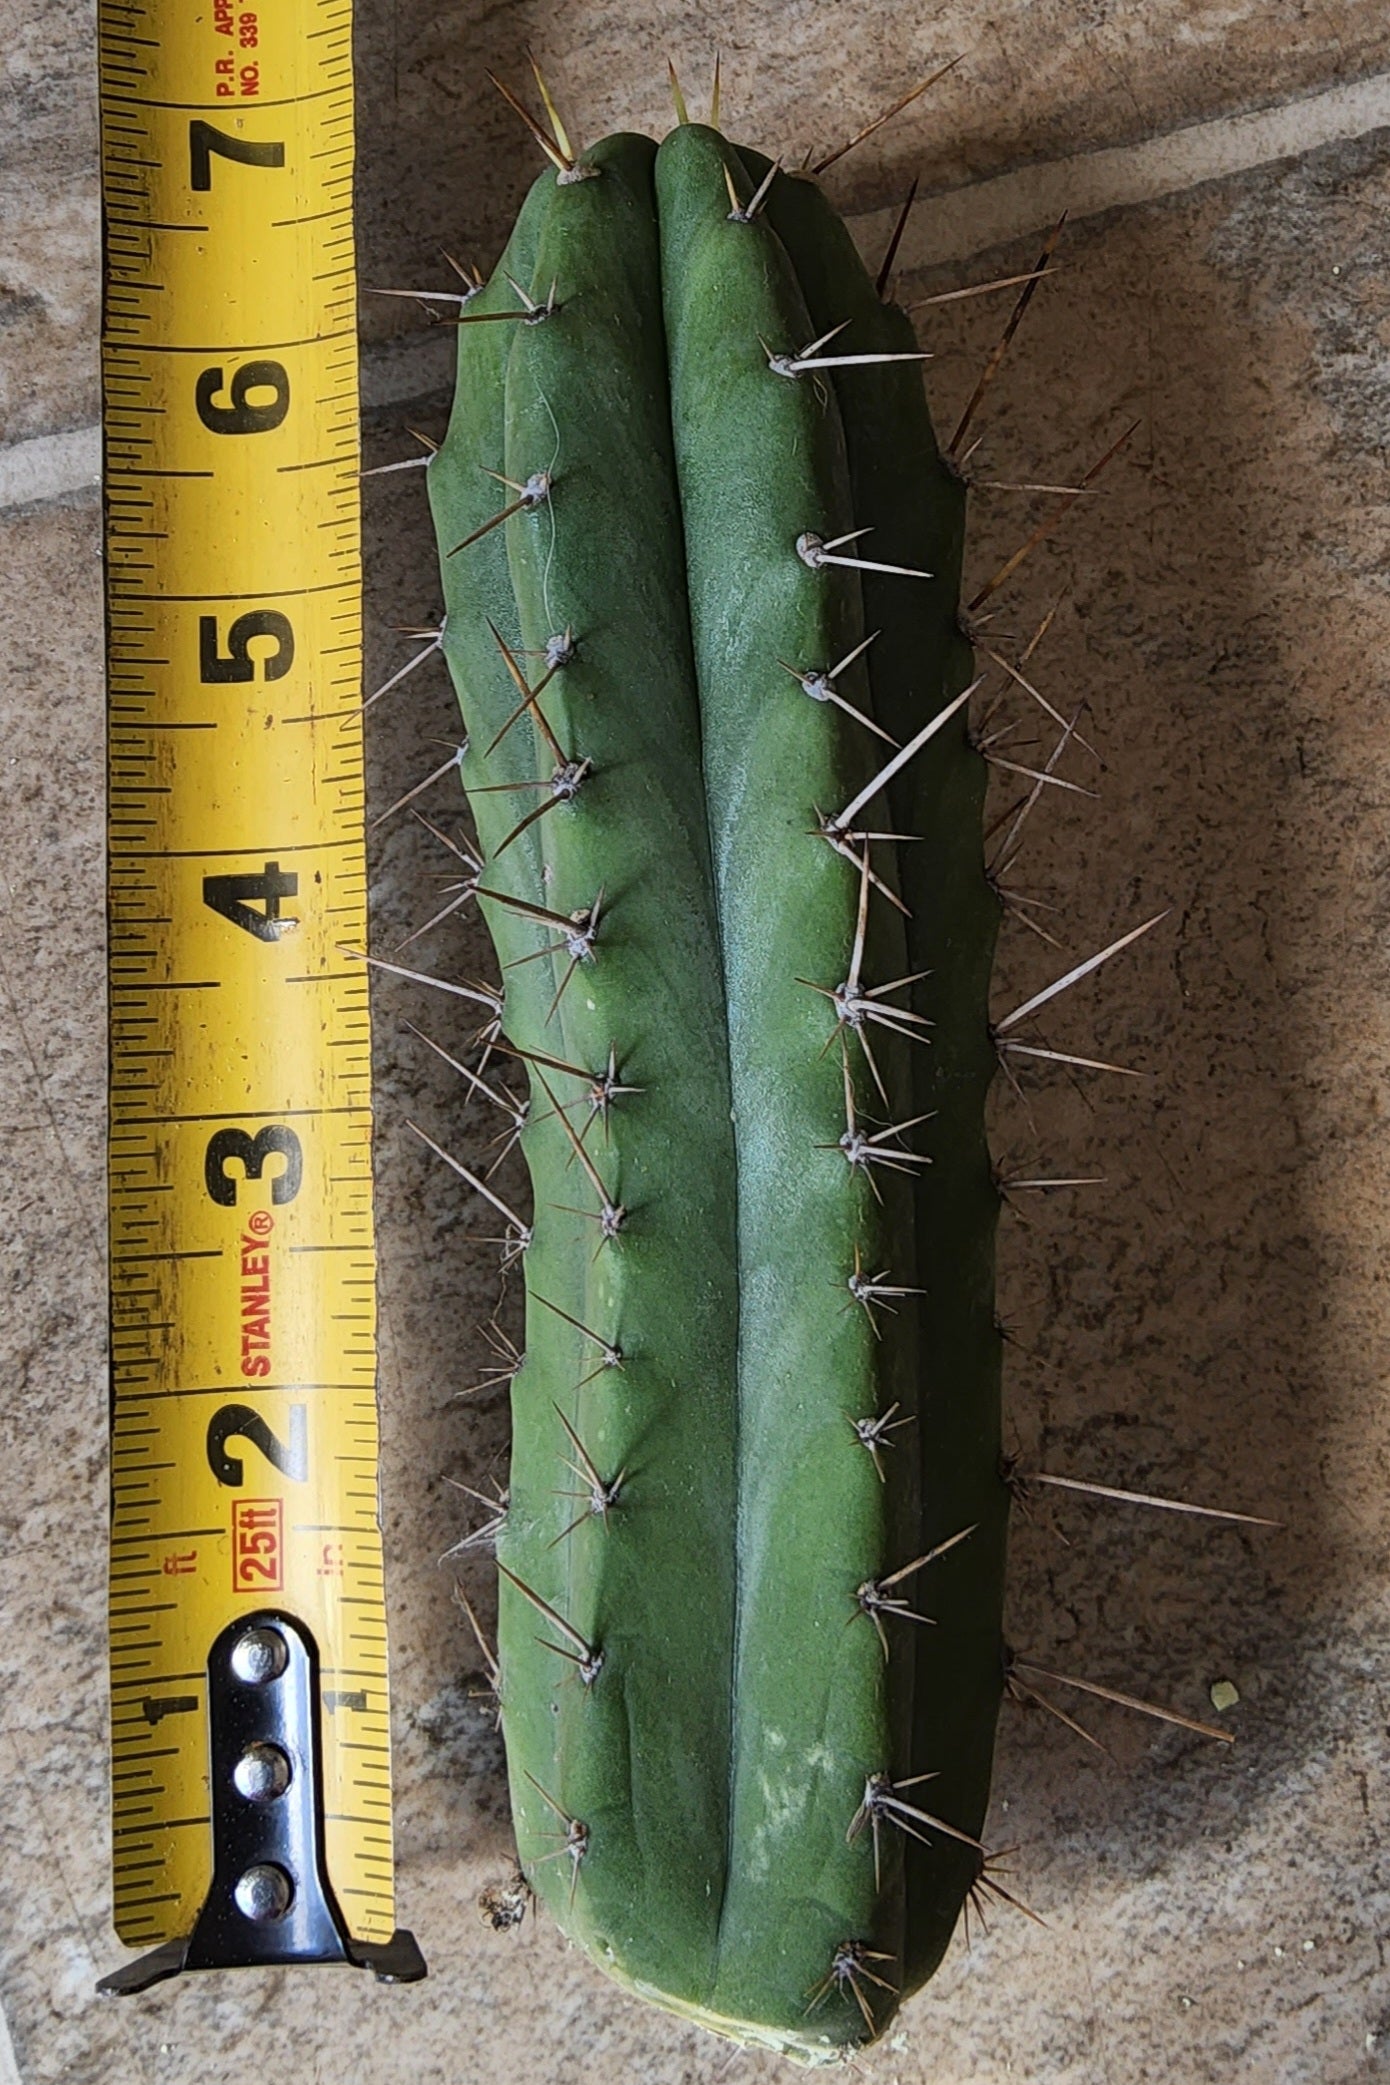 T. (SS02 x SS01) x Huarazensis Cactus Cutting